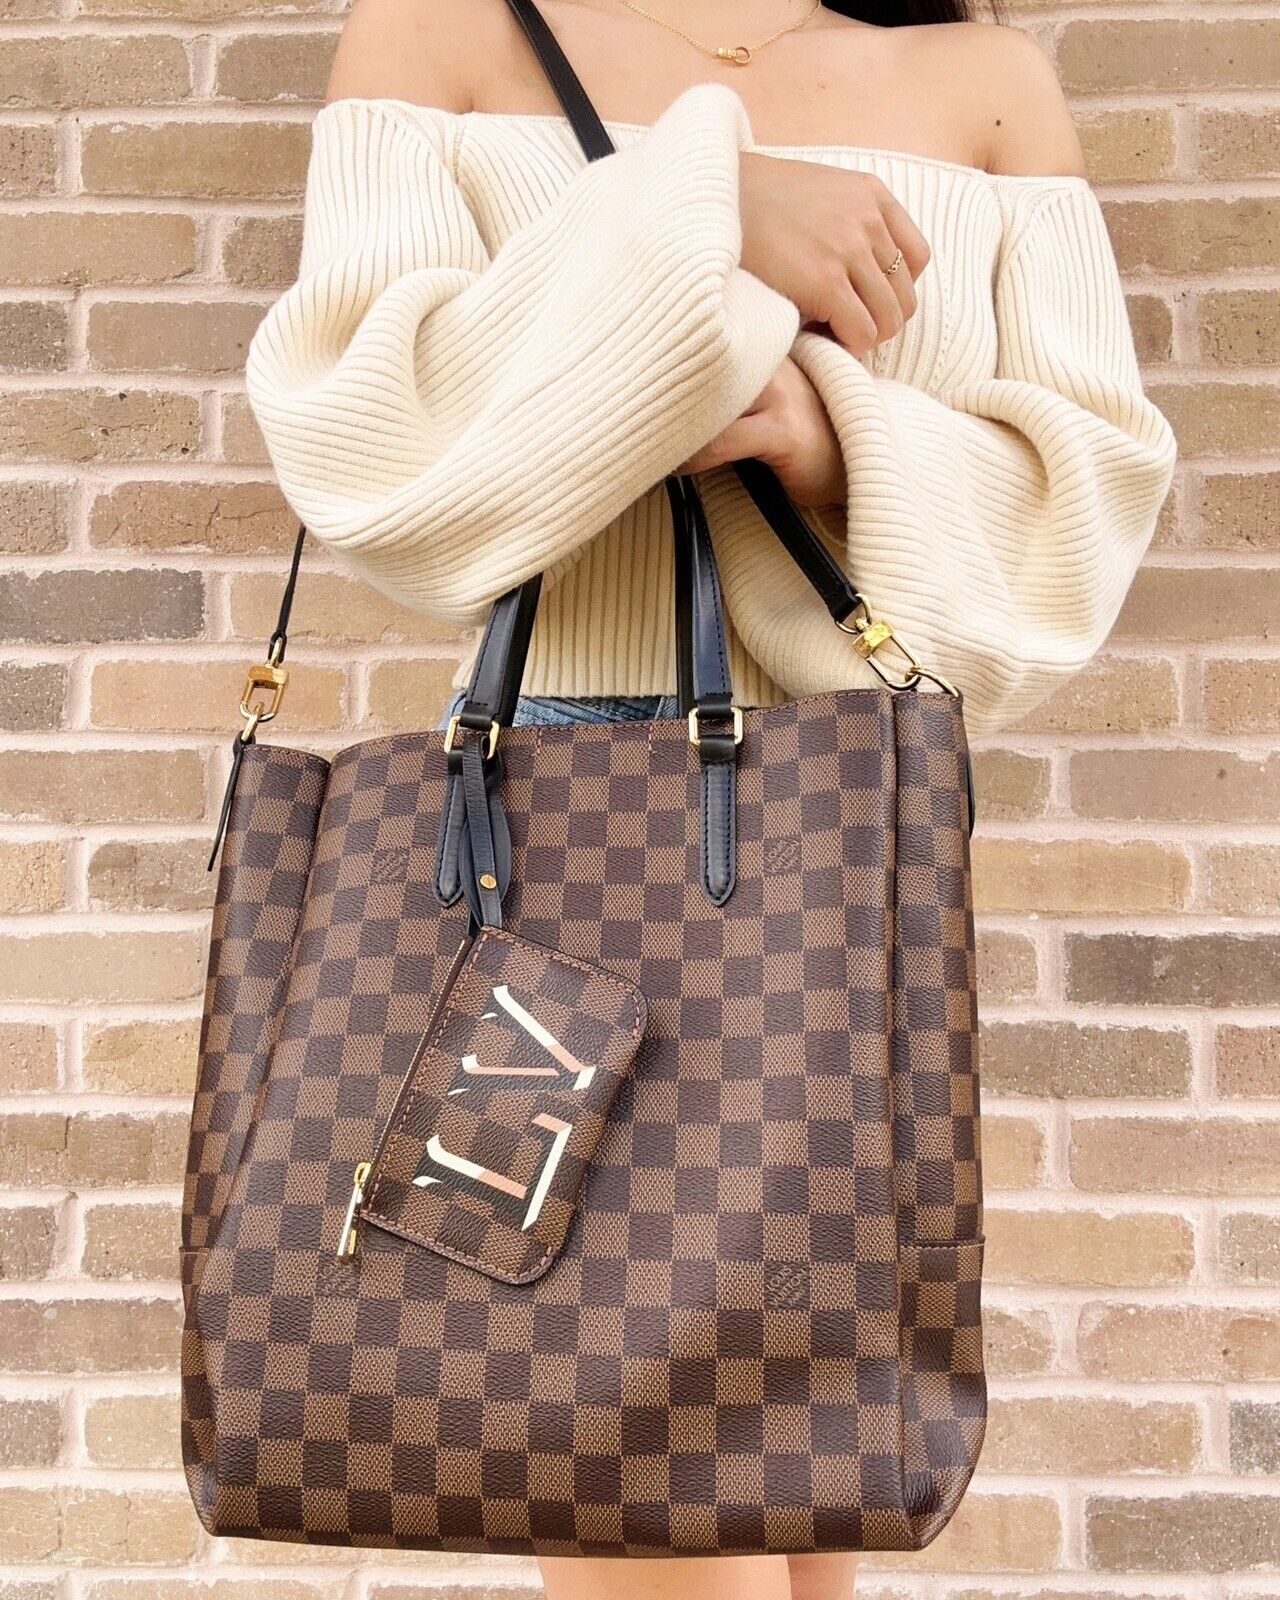 Chanel - Louis Vuitton, Sale n°2245, Lot n°39